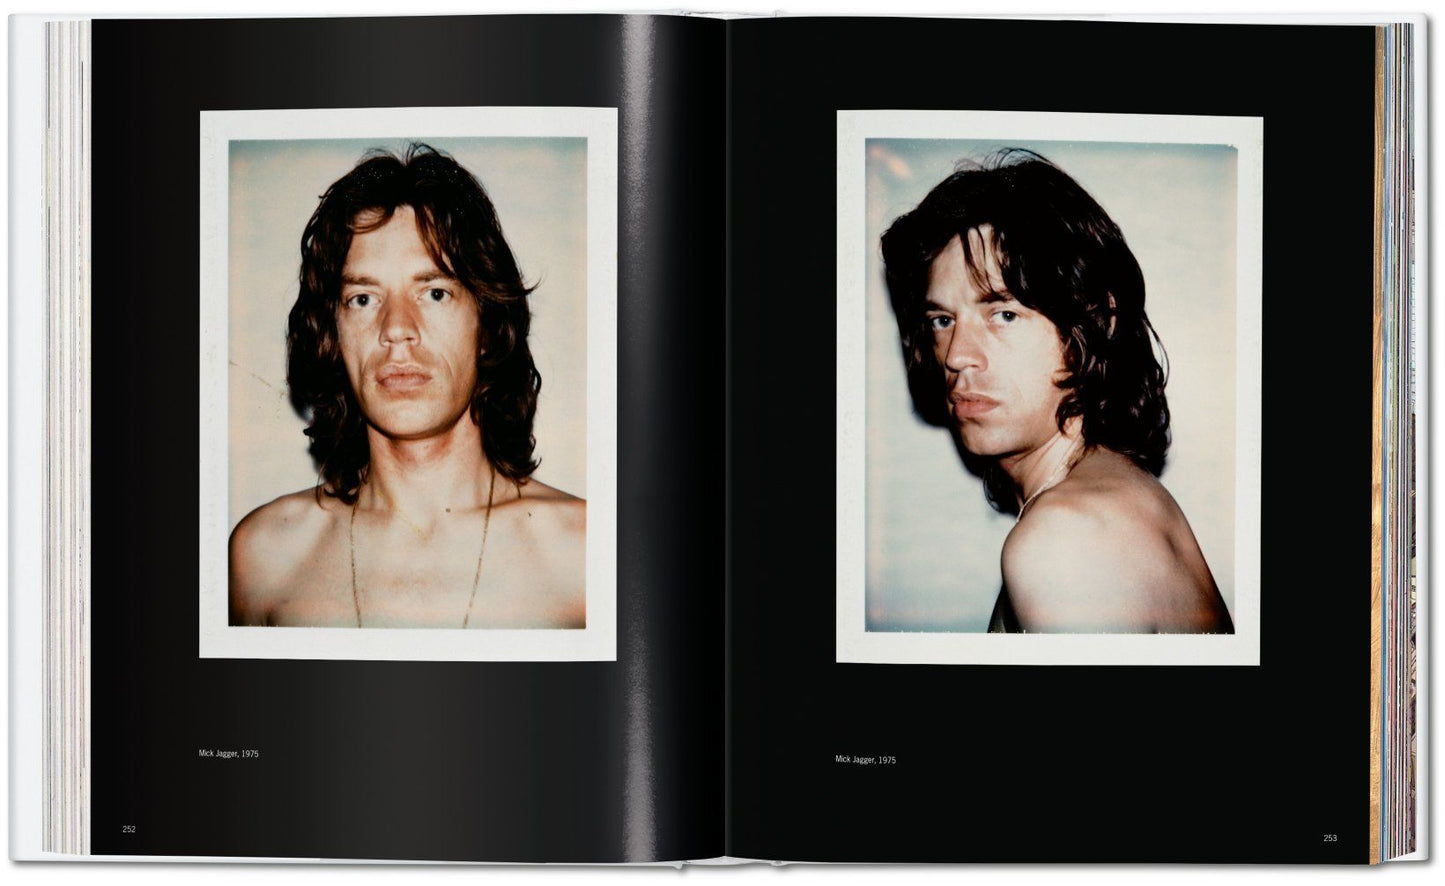 Andy Warhol /  Polaroids 1958 - 1987